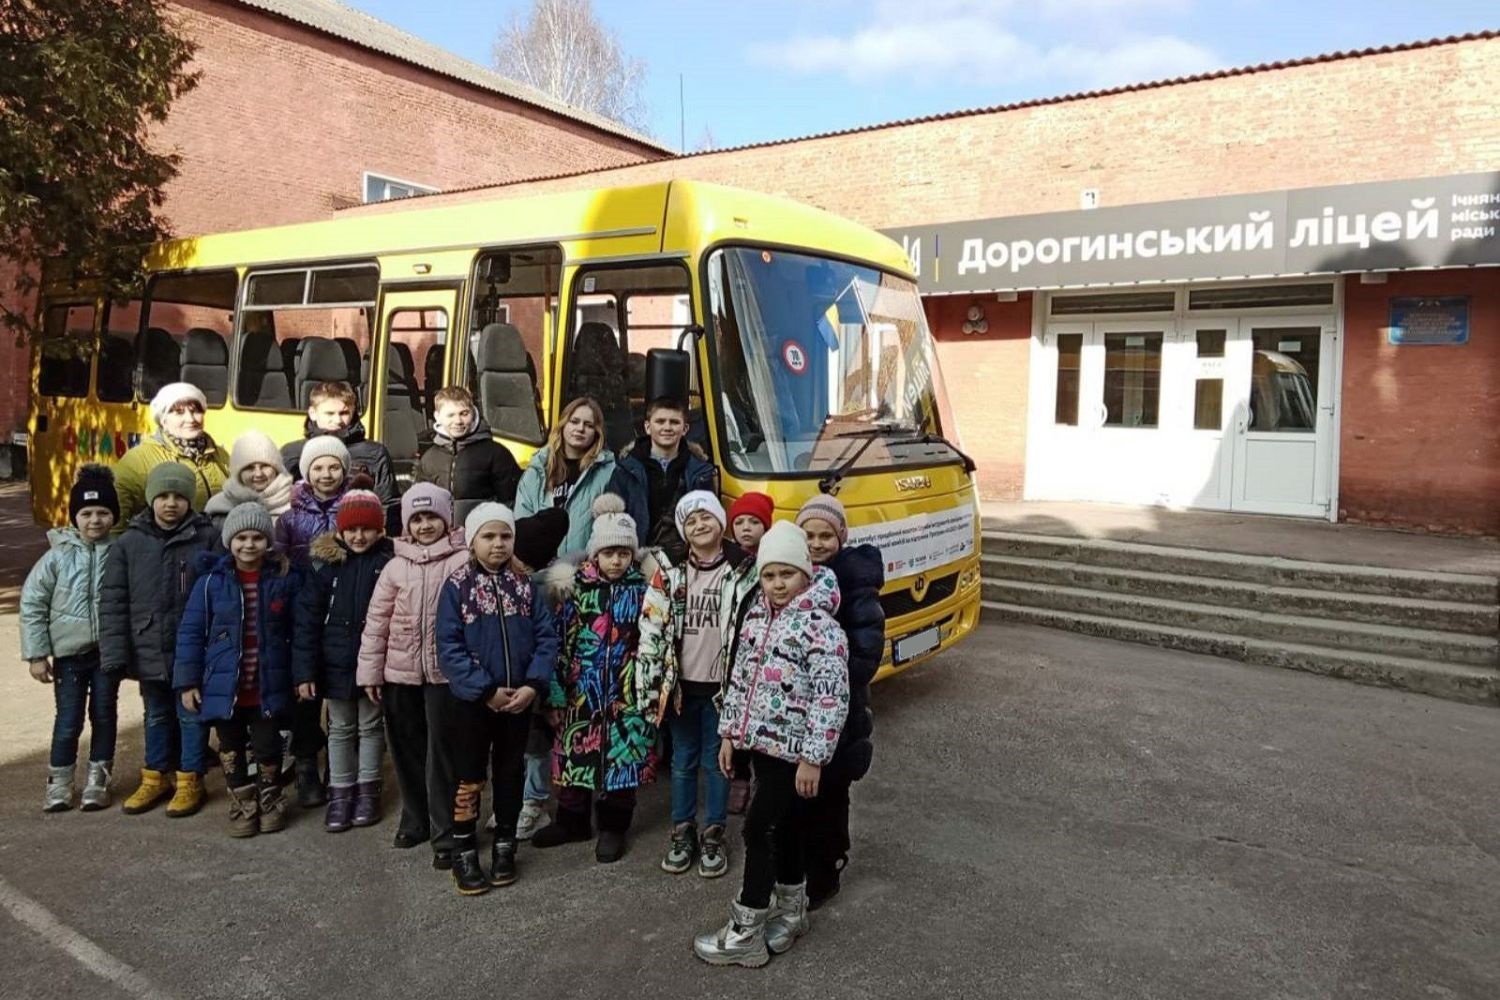 U-LEAD provided Ukrainian municipalities with school buses